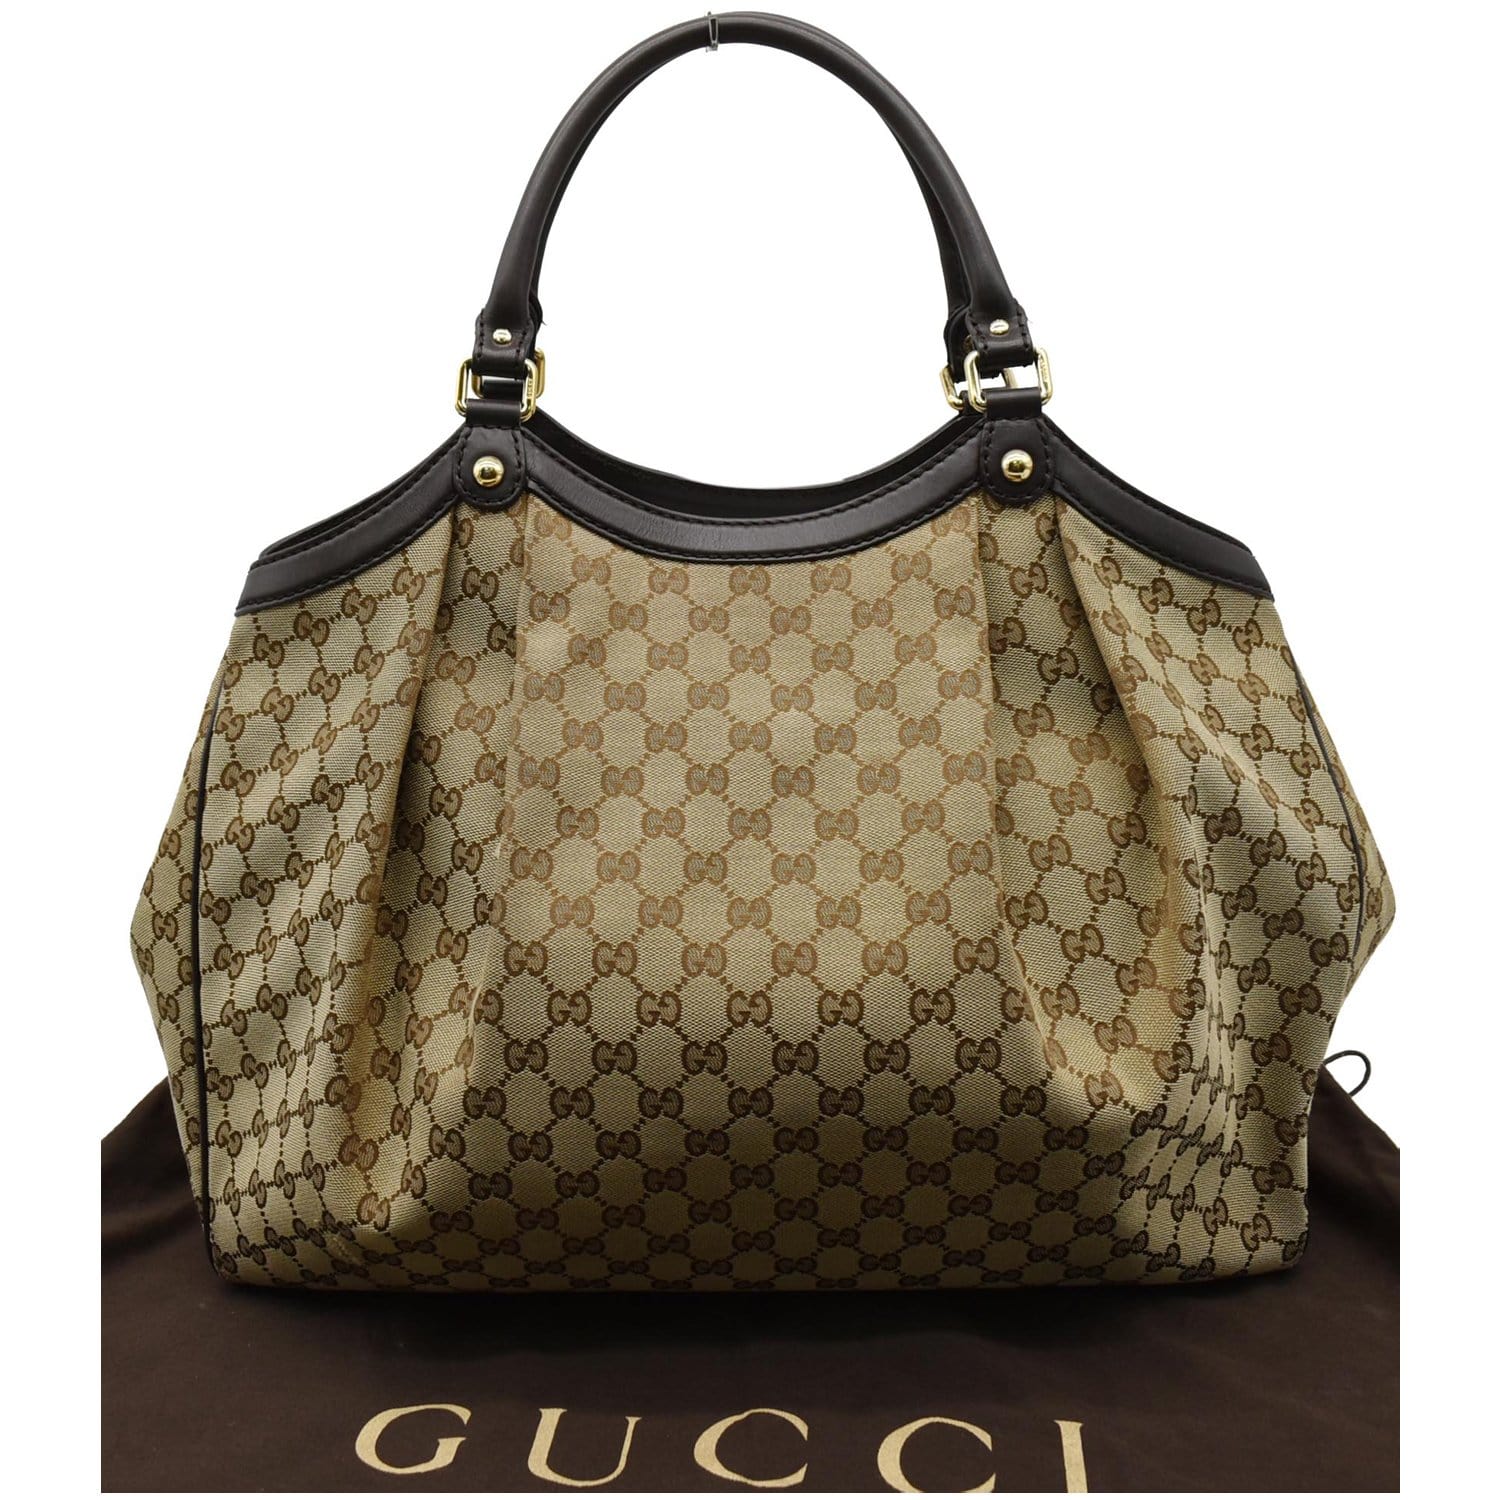 Gucci Beige/Brown GG Canvas Medium Sukey Tote Bag